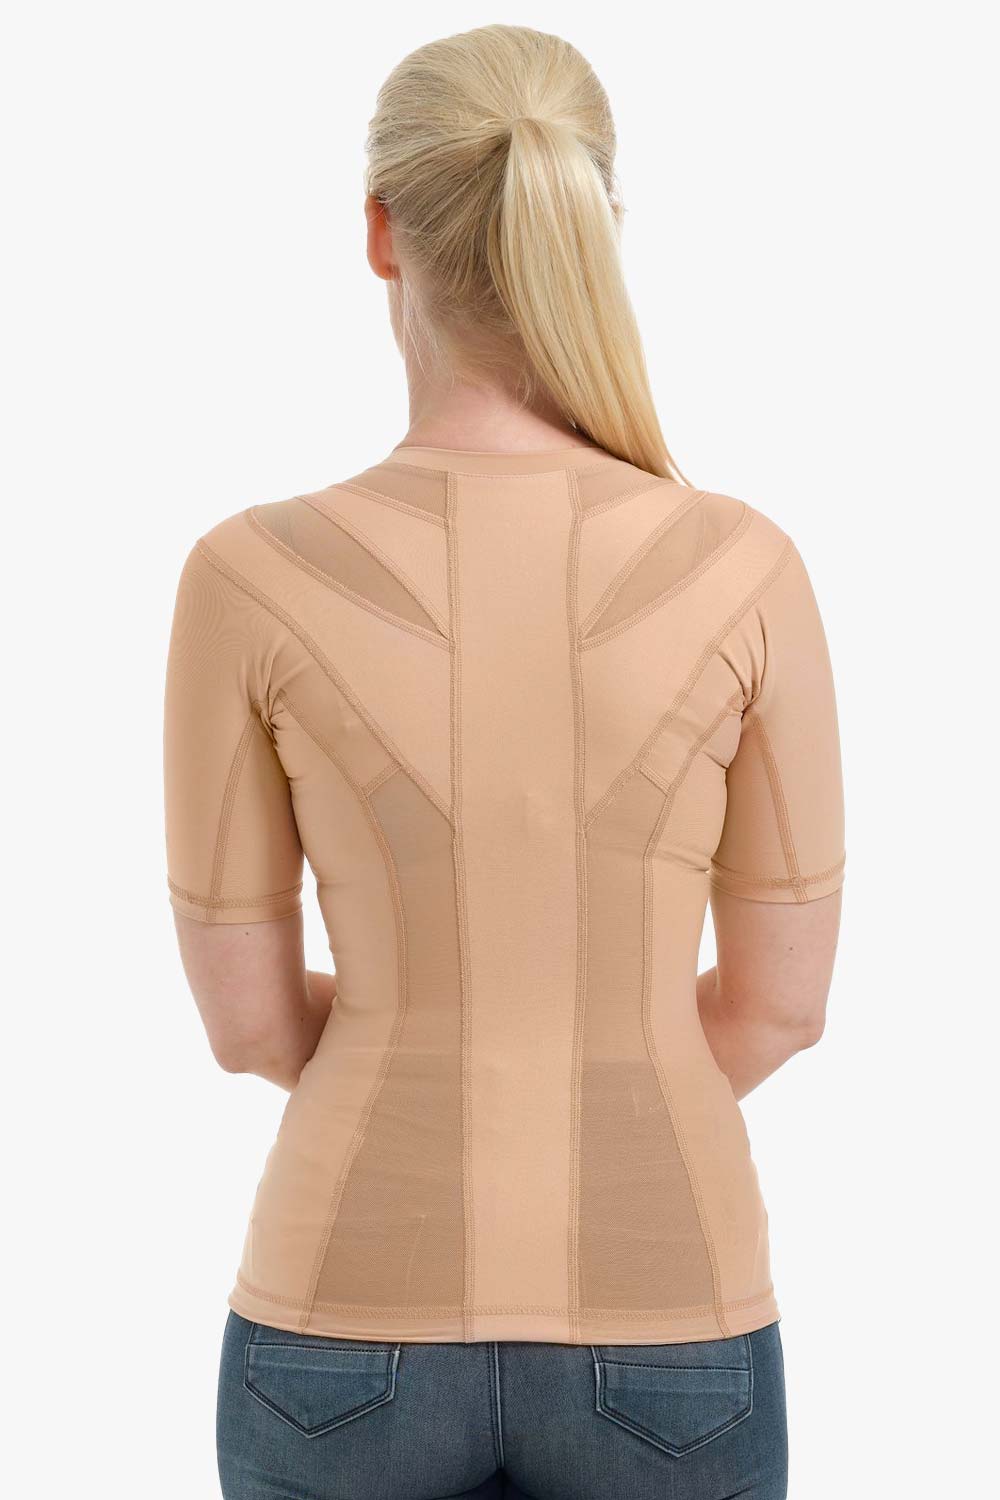 DEMO | Women's Posture Shirt™ Zipper - Nude